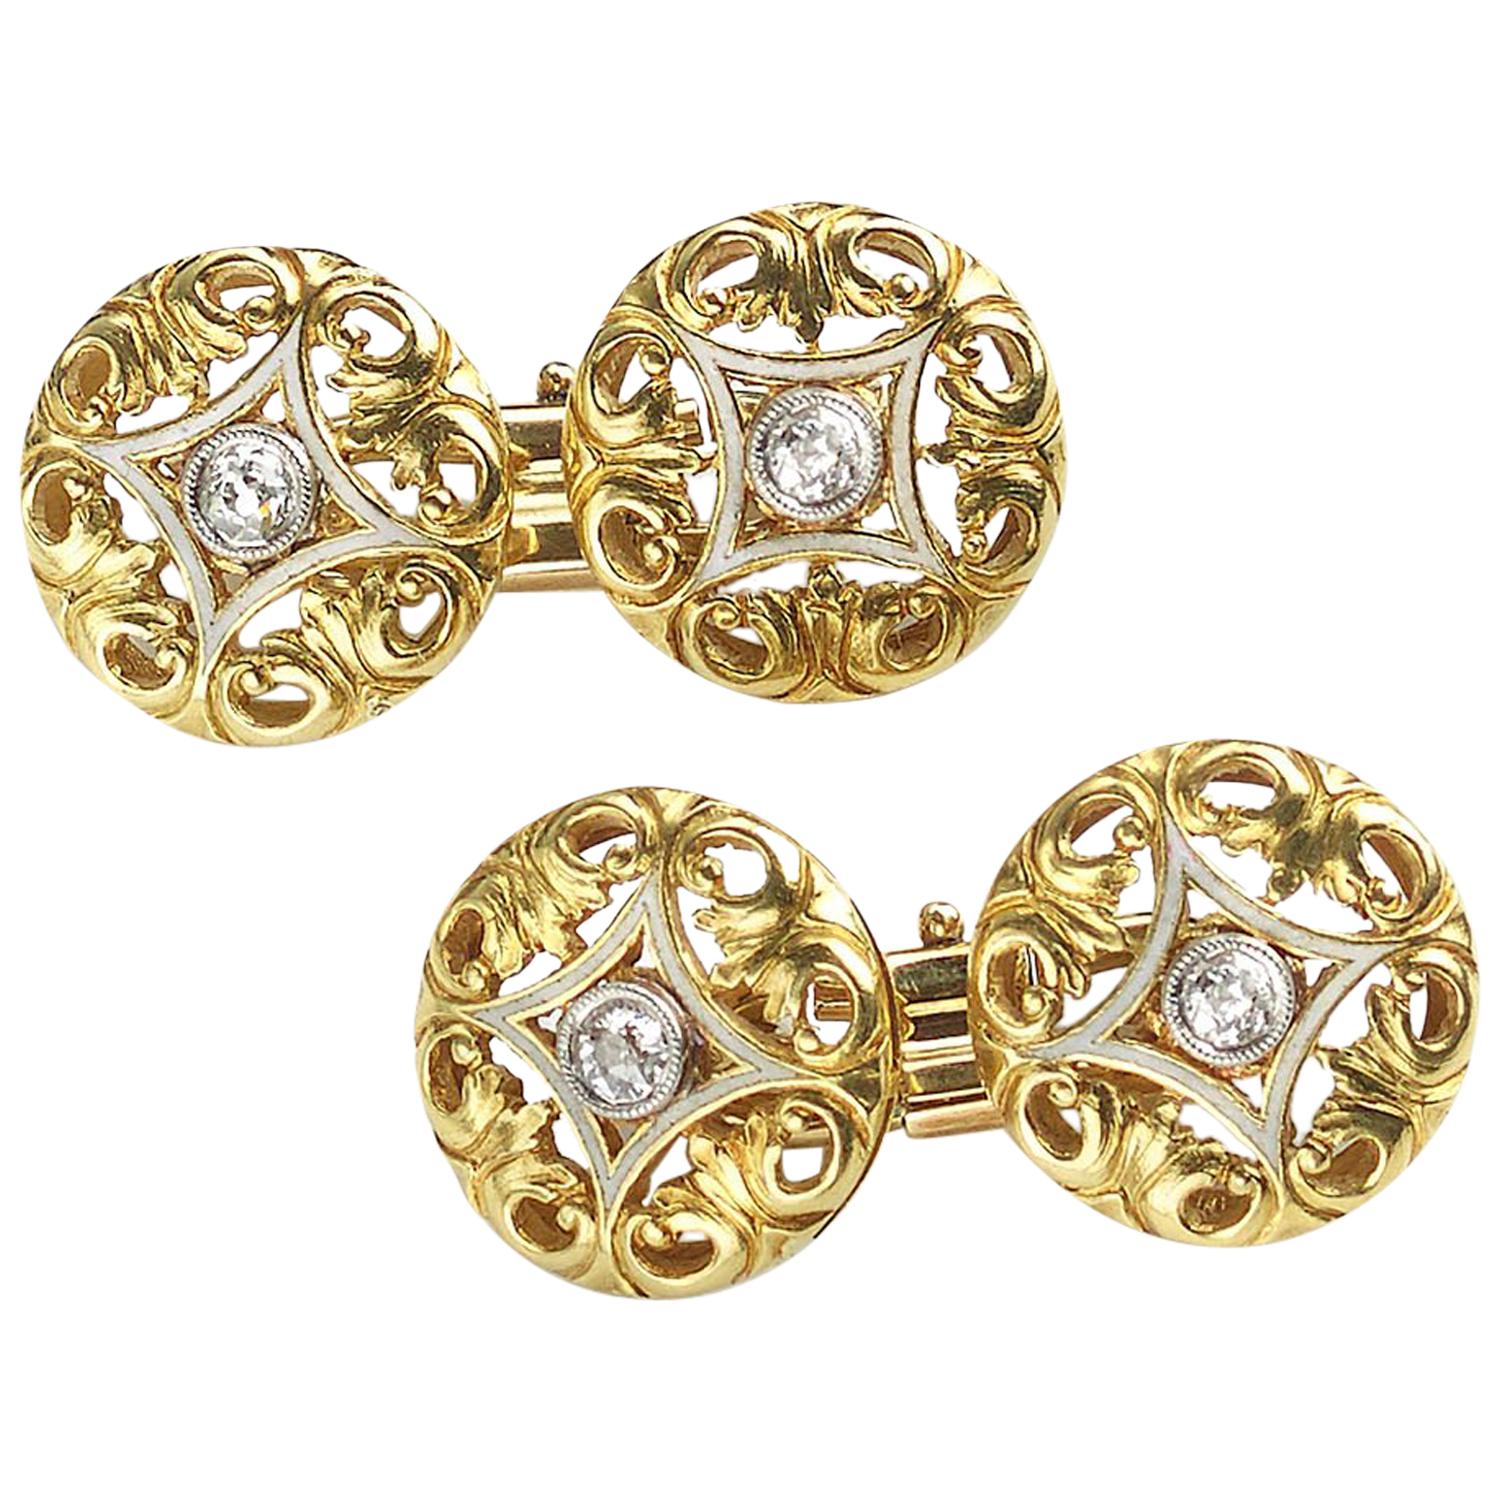 French, Art Nouveau Gold and Diamond Cufflinks